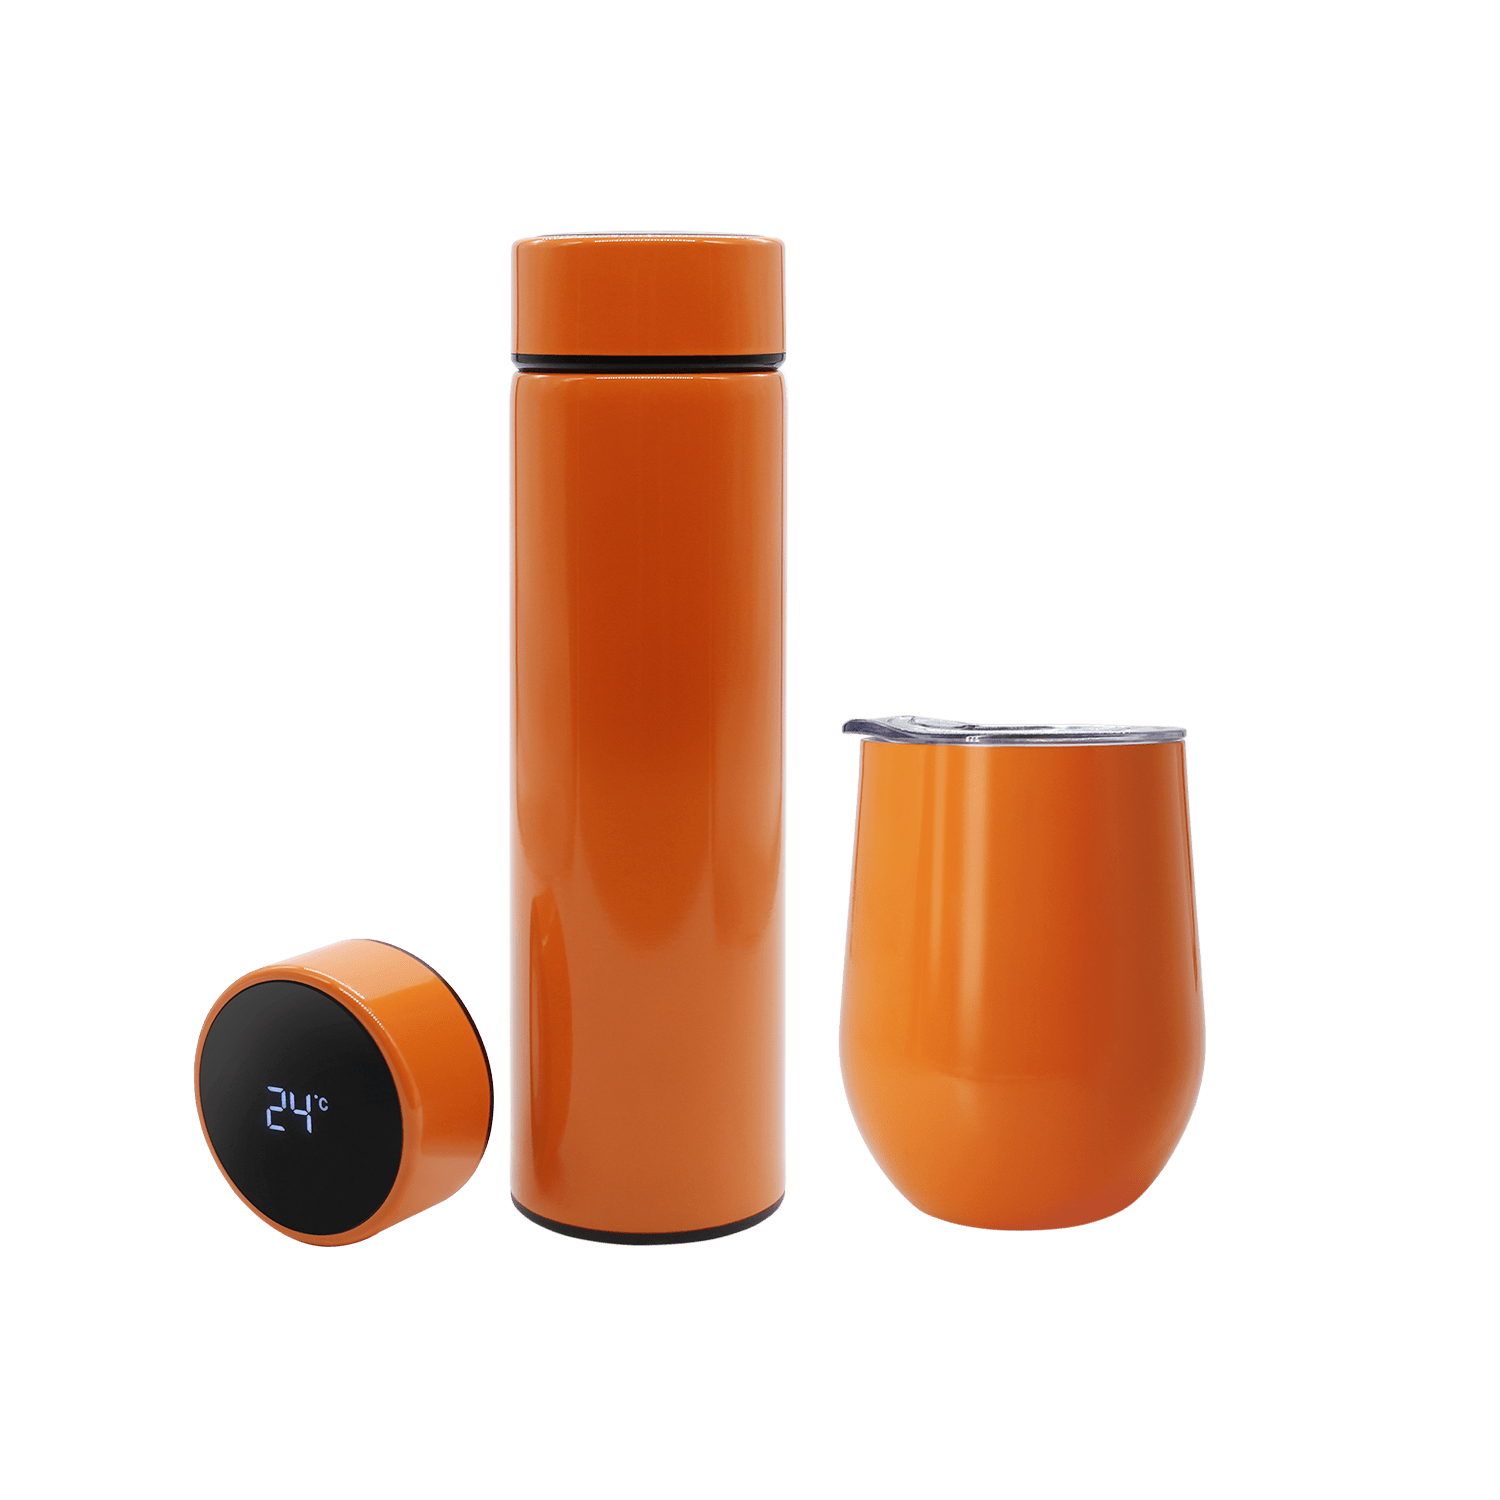 Набор Hot Box C G (оранжевый), оранжевый, металл, микрогофрокартон